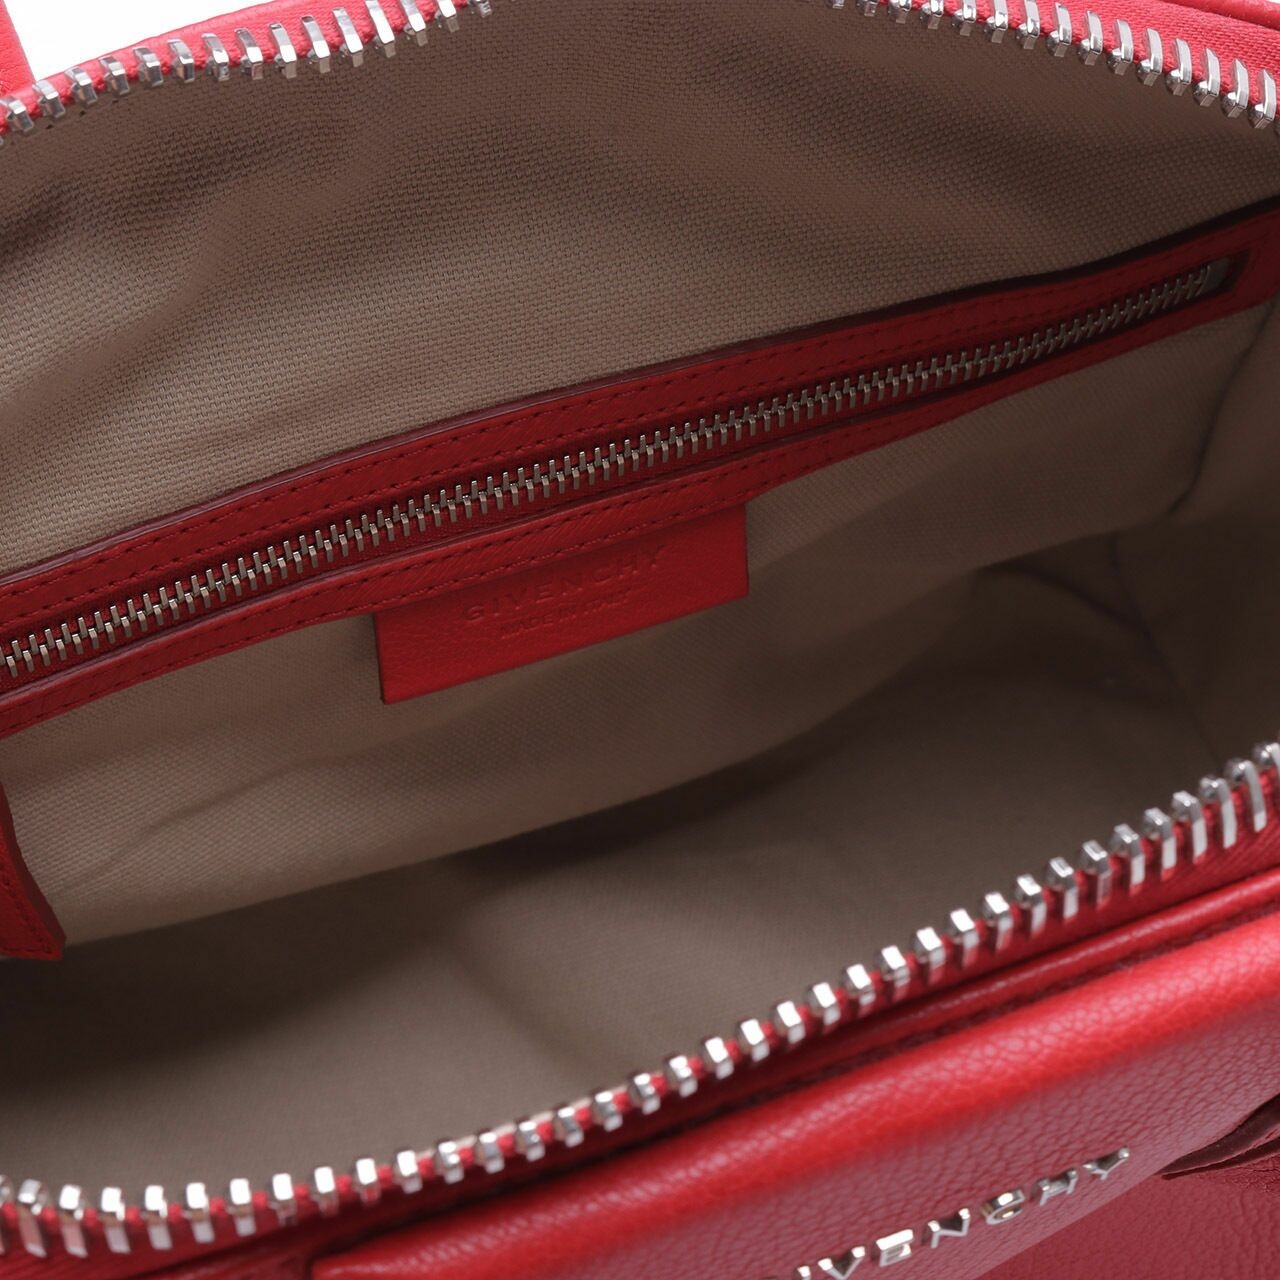 Givenchy Antigona Leather Red Satchel Bag